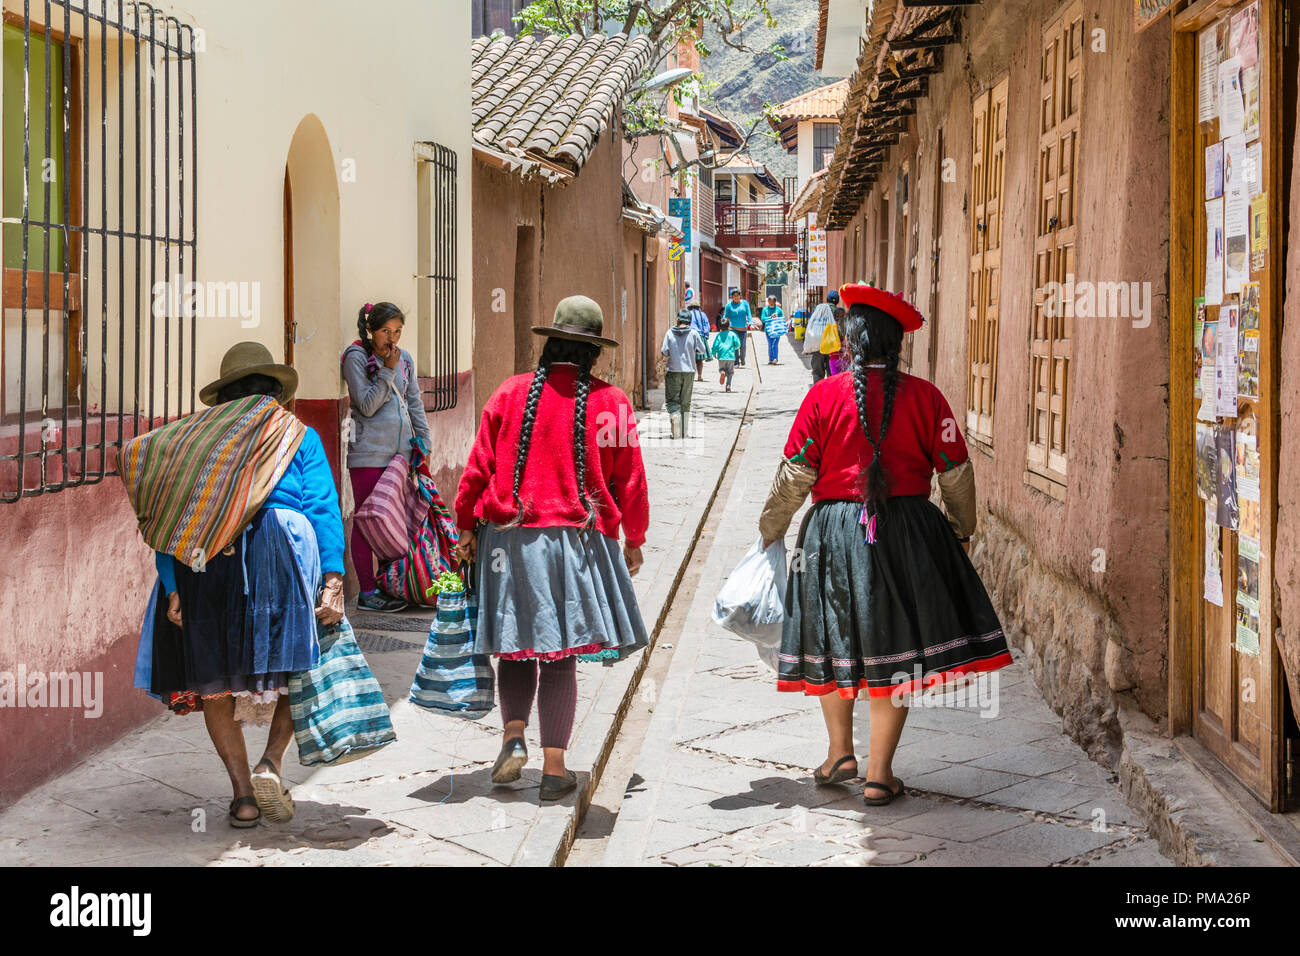 Pisac Peru, Peruvian women with braids wearing colorful clothing and hats walk down a narrow street. Stock Photo